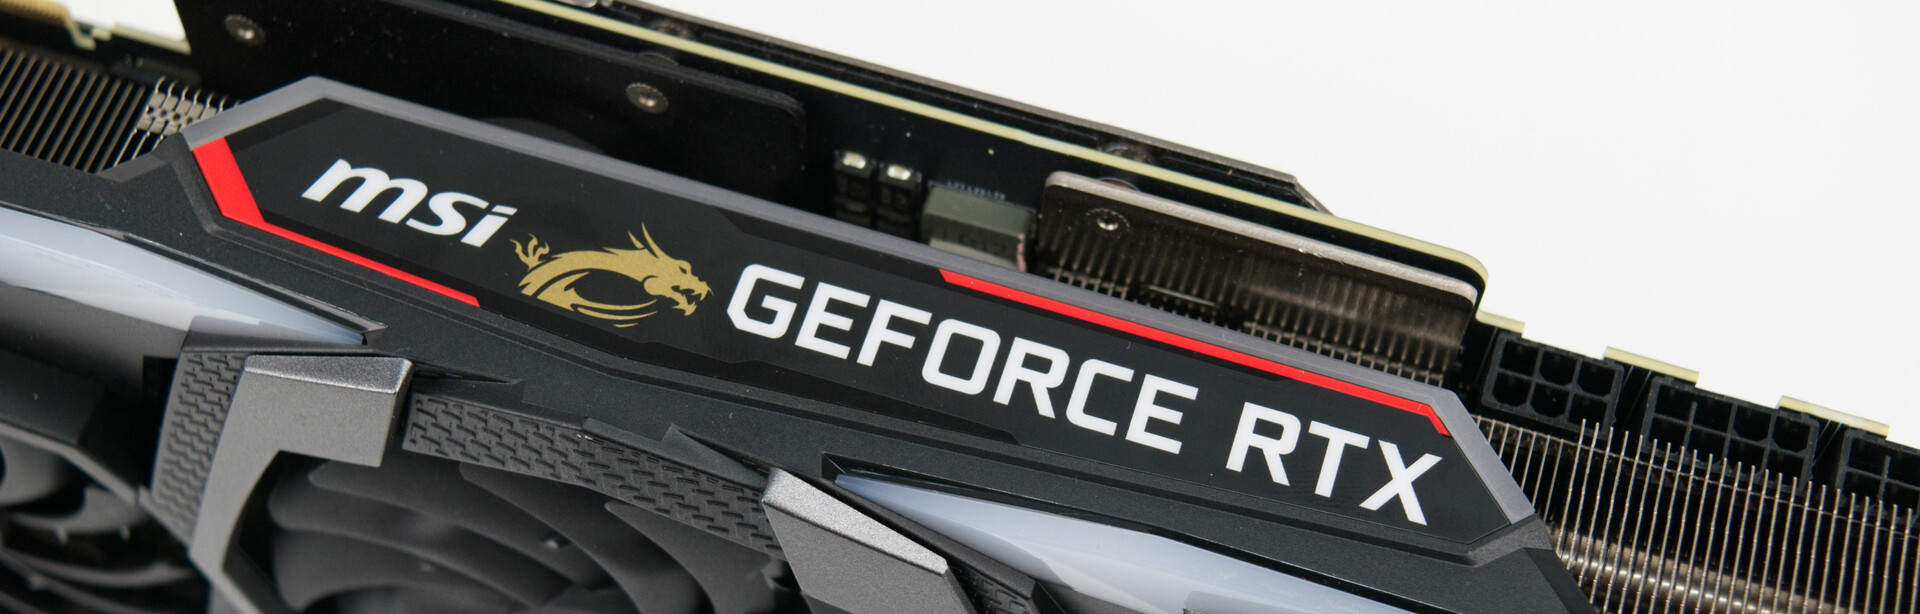 MSI GeForce RTX 2080 Ti Gaming X Trio Desktop GPU Review: The ...